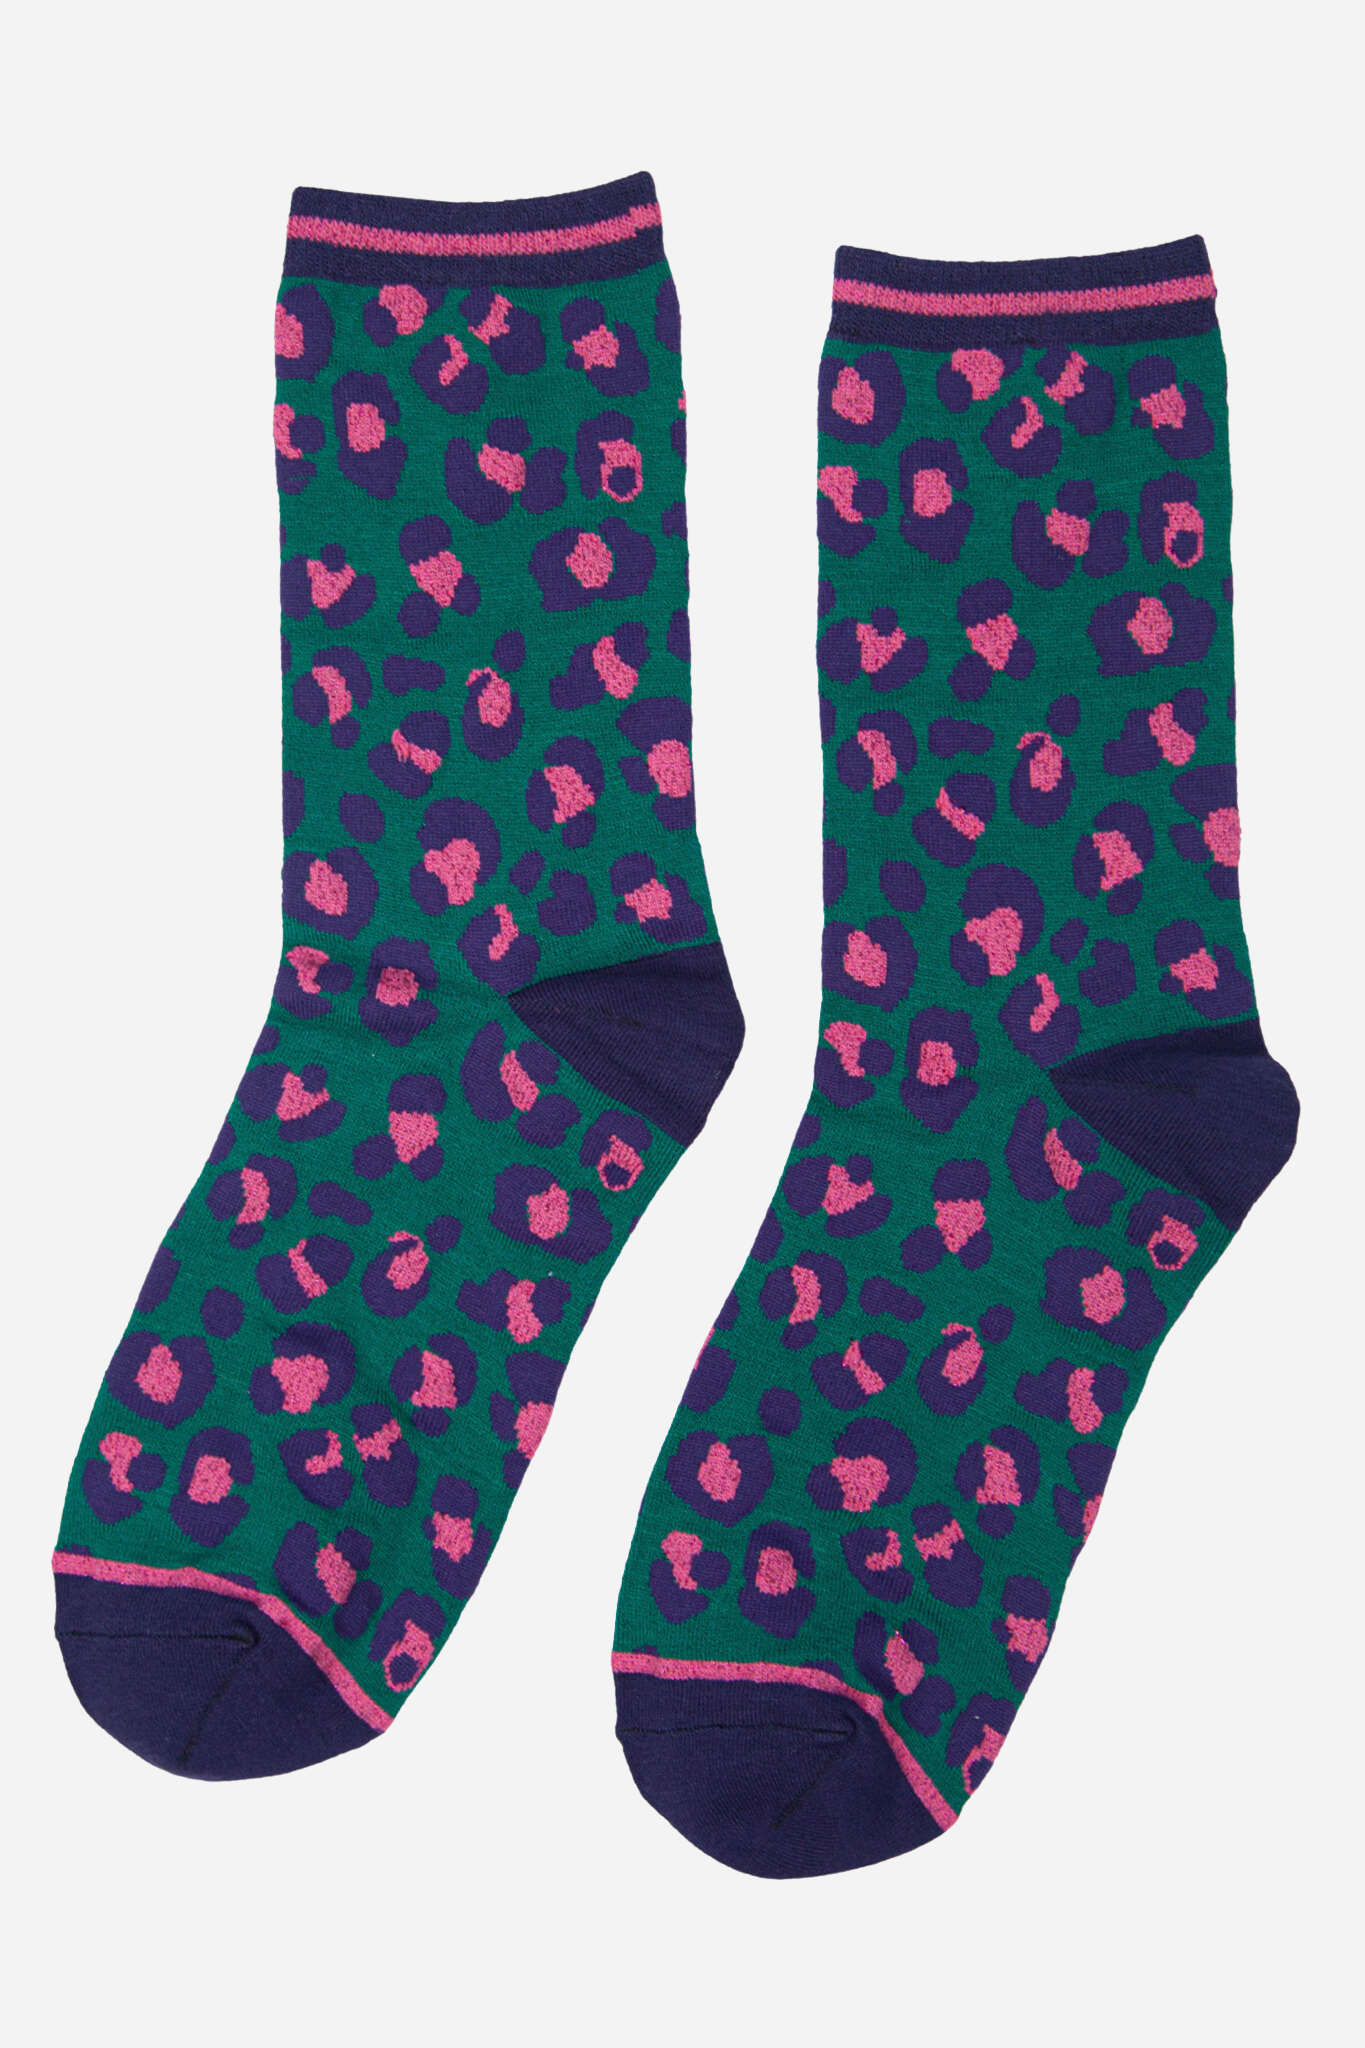 Women's Bamboo Socks Leopard Print Ankle Socks Green Pink